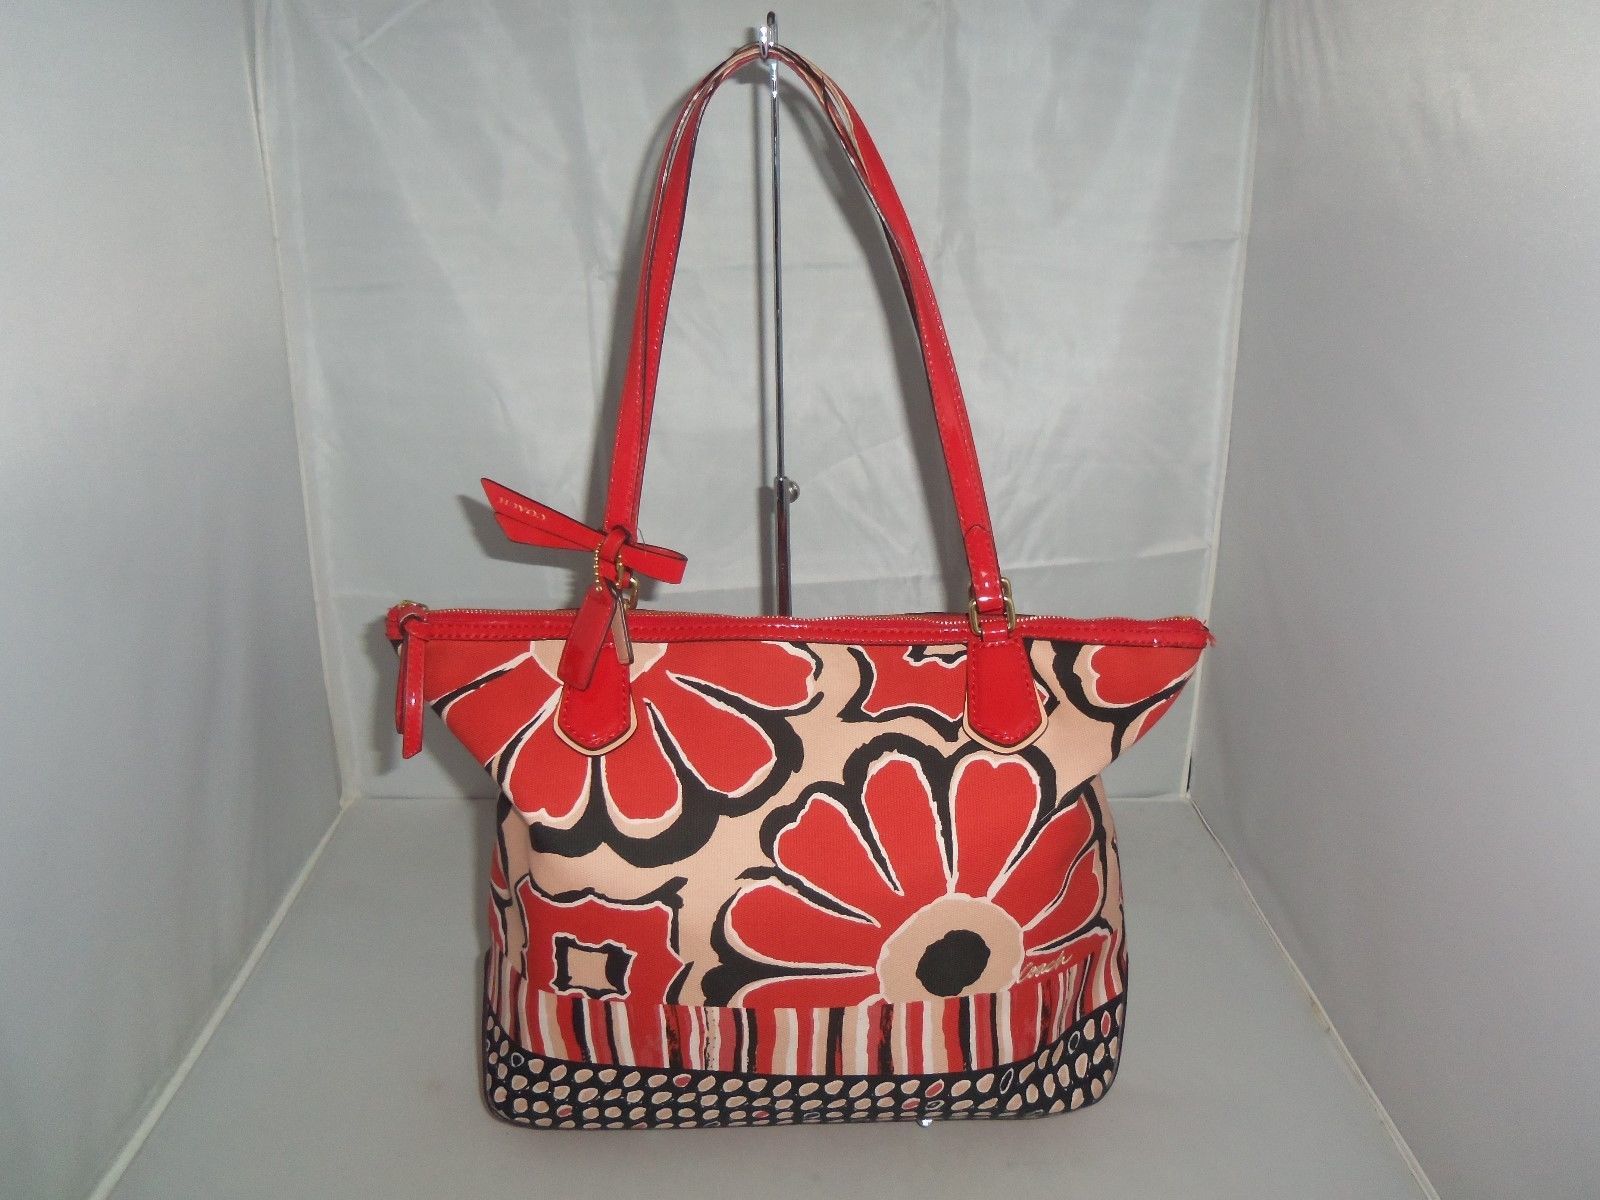 COACH HANDBAG 25123 SMALL POPPY FLORAL SCRAF PRINT TOTE, SHOULDER BAG PURSE $178 - Handbags & Purses